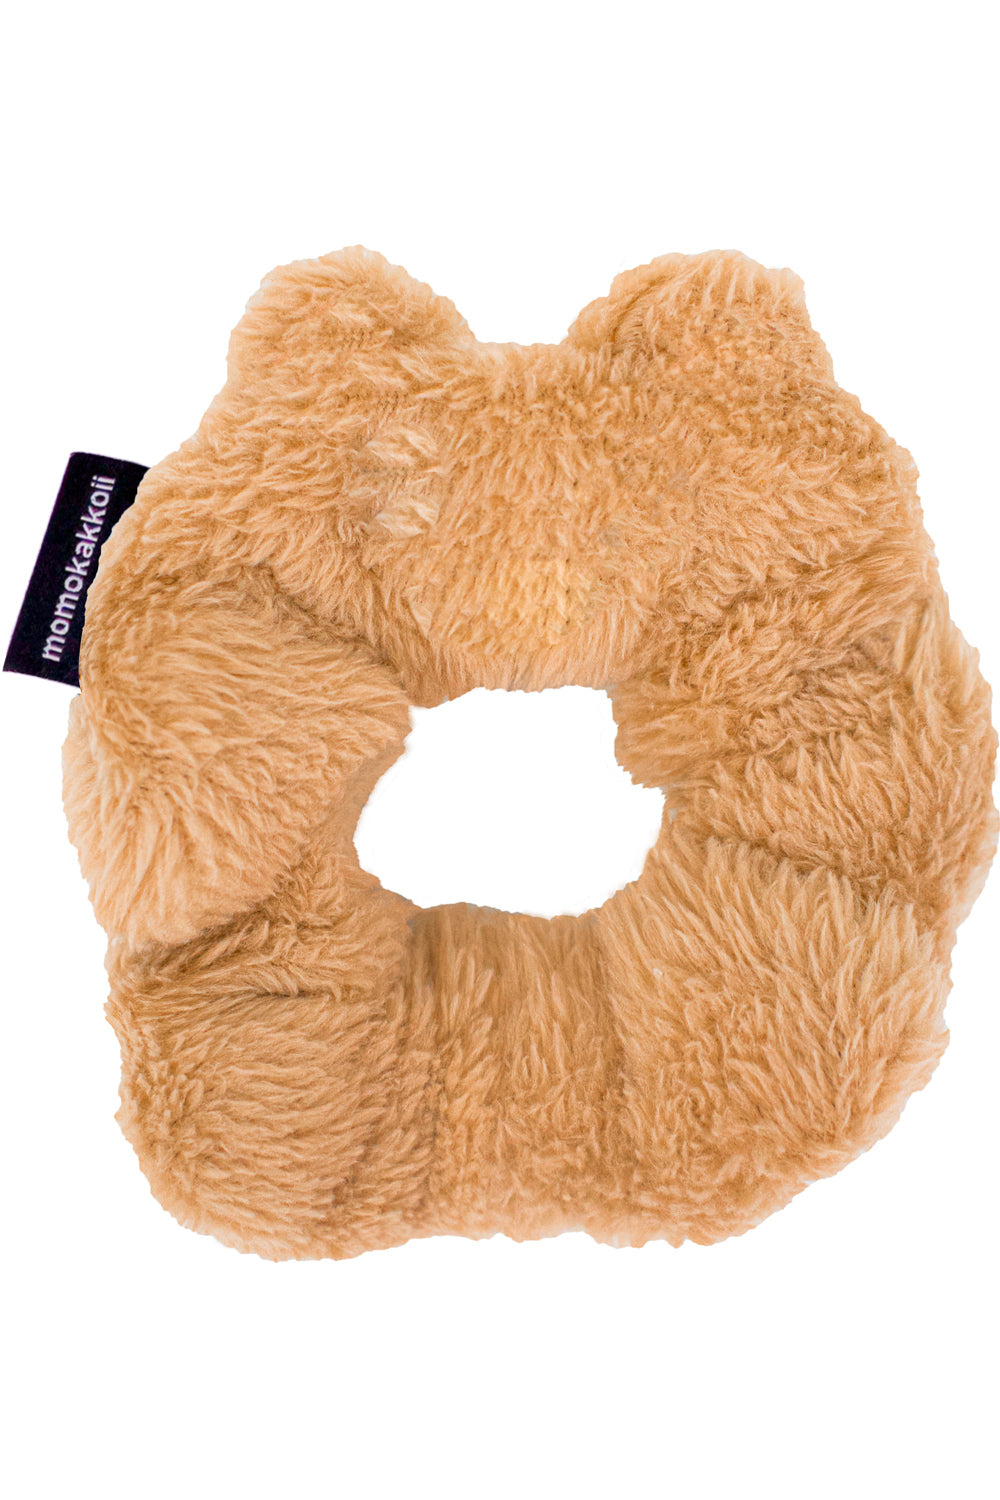 Kimi The Bear Handmade Scrunchie